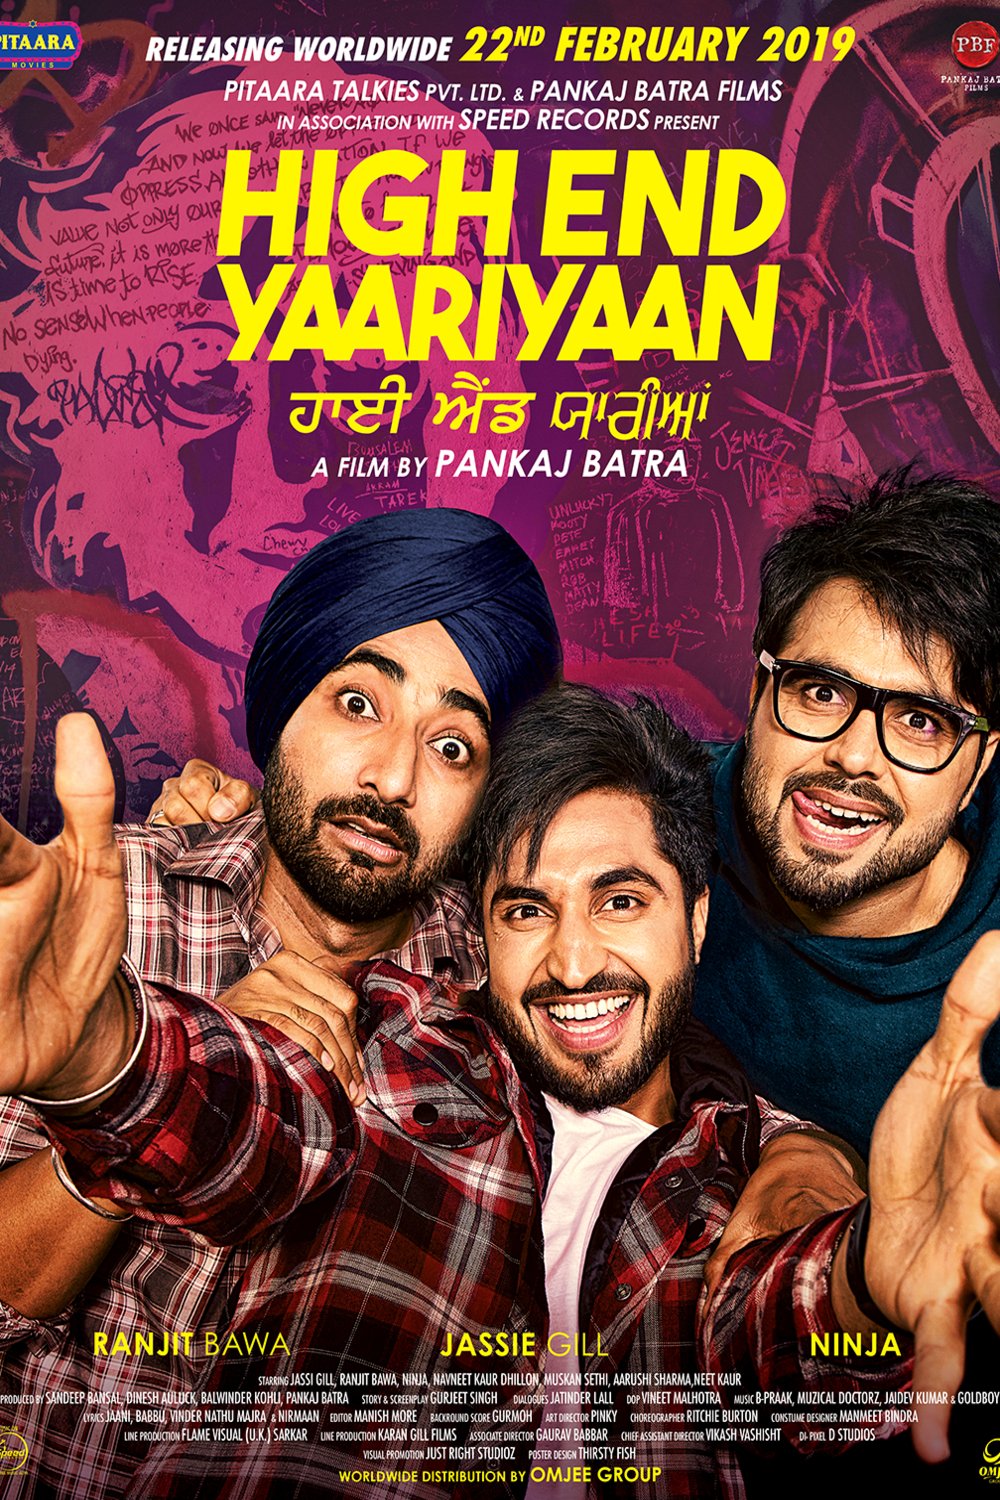 Punjabi poster of the movie High End Yaariyaan